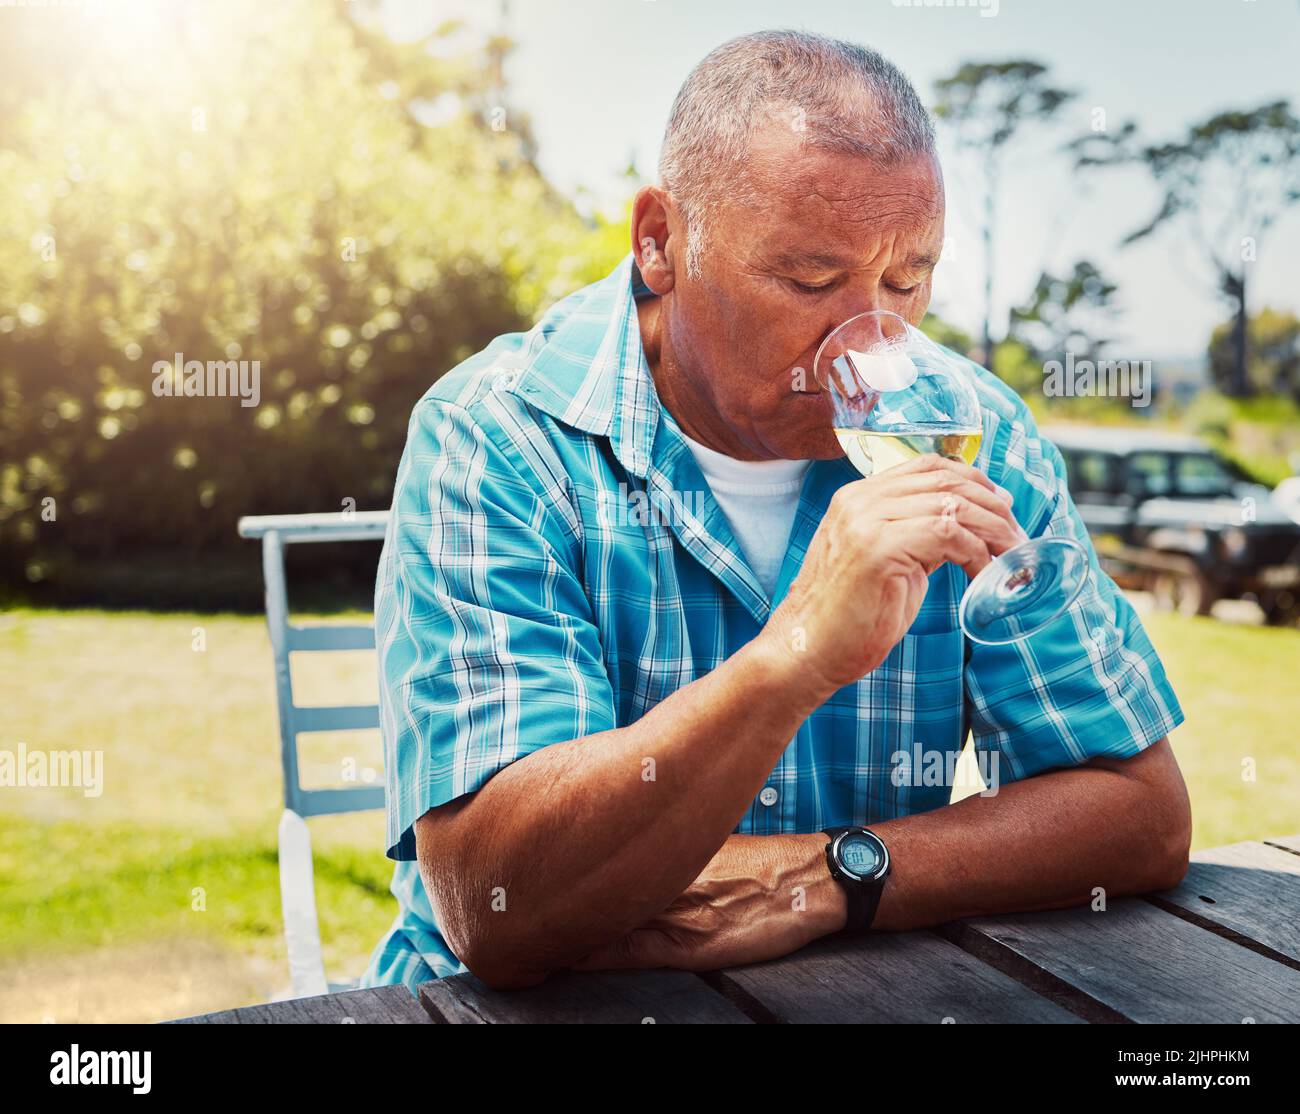 One senior mixed race man sitting alone and drinking glass of white wine during wine tasting on a vineyard. Elderly hispanic man holding and enjoying Stock Photo